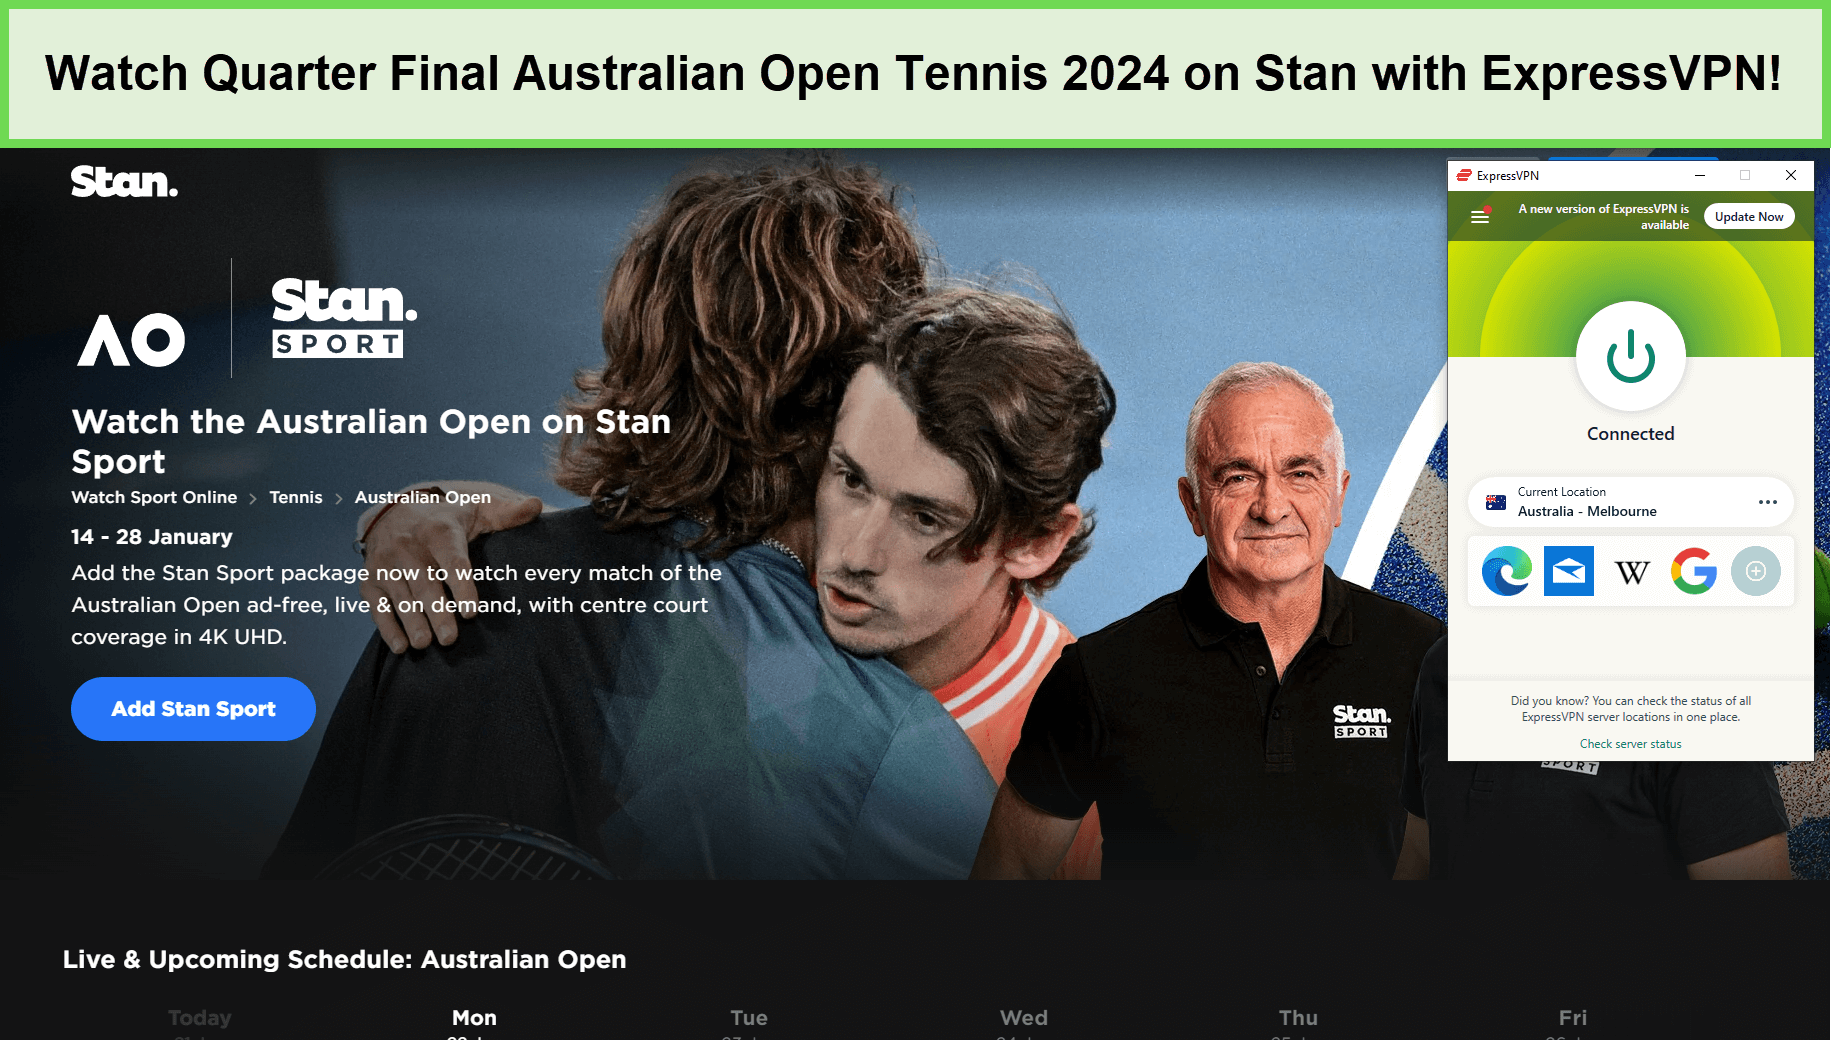 Watch-Quarter-Final-Australian-Open-Tennis-2024-in-New Zealand-on-Stan-with-ExpressVPN